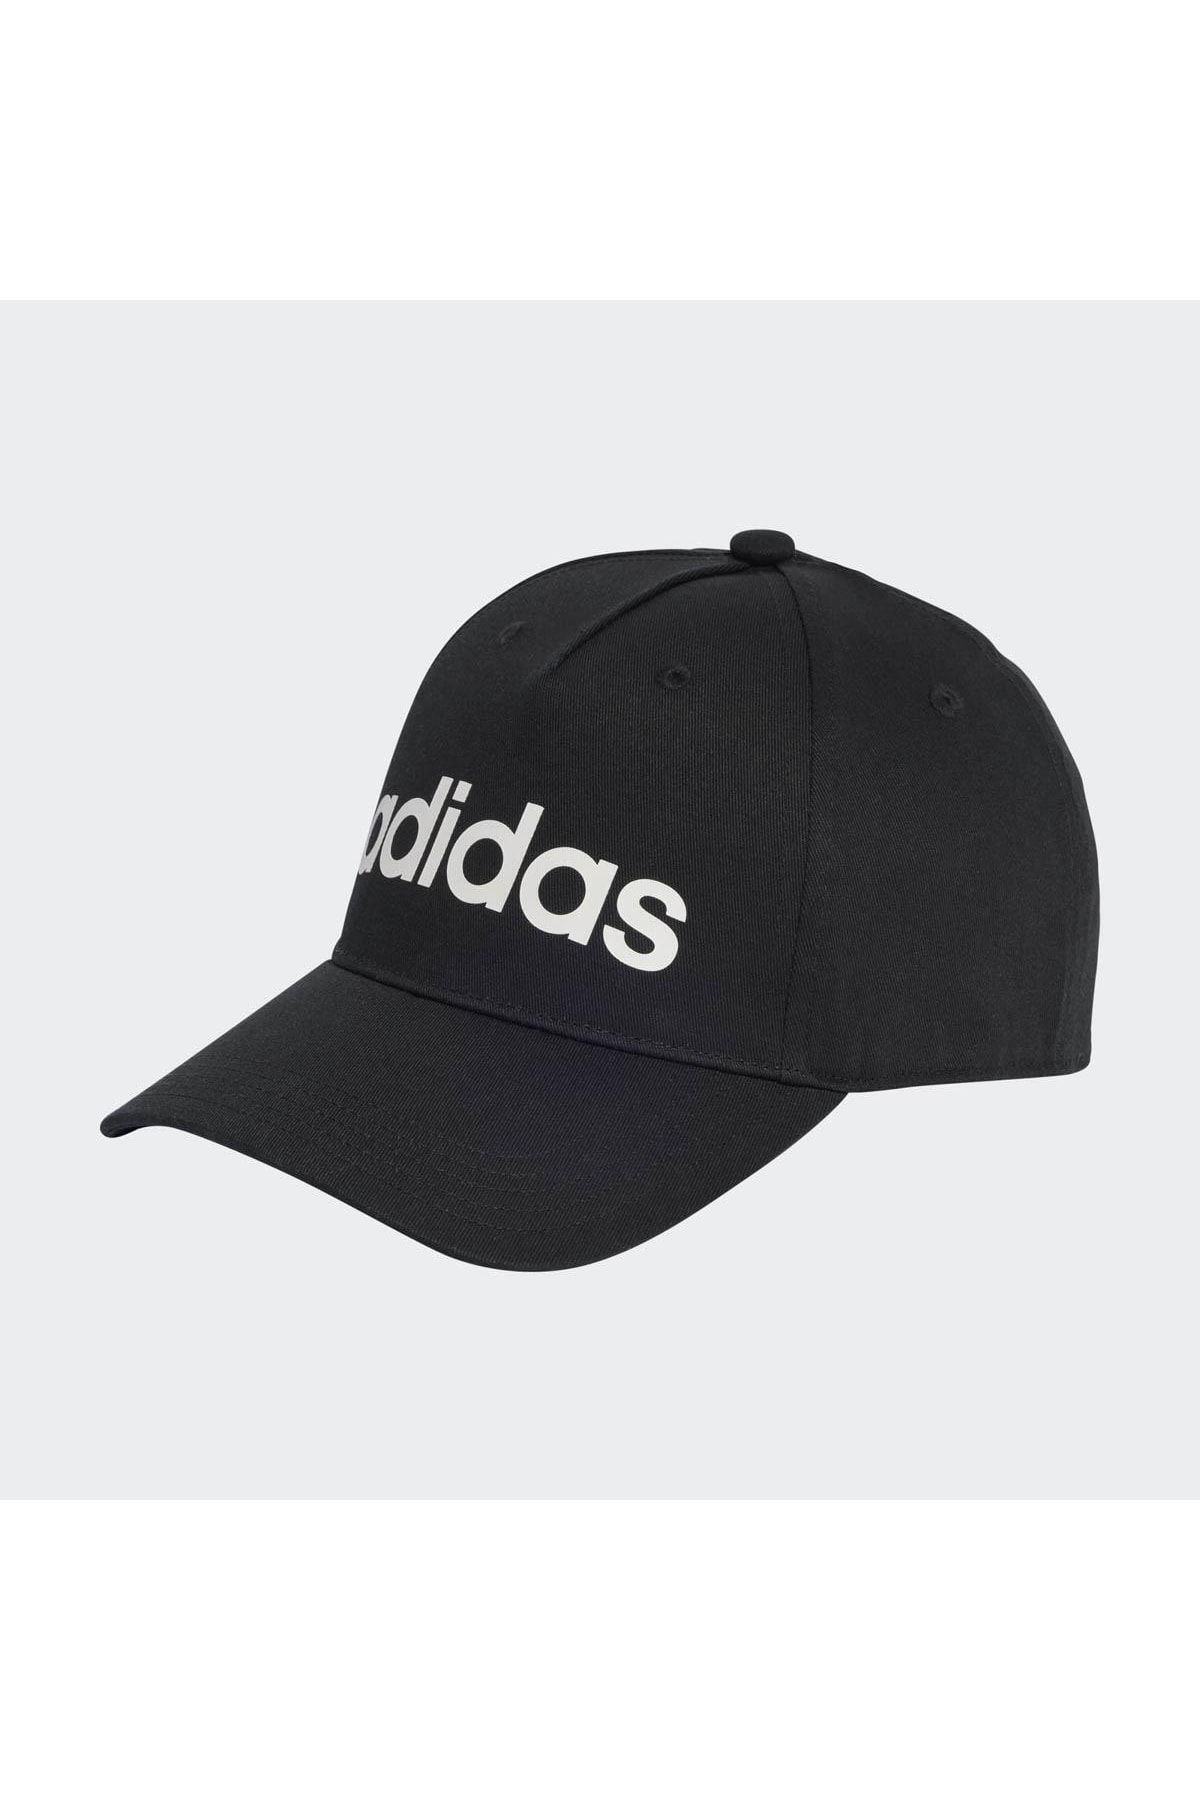 adidas کلاه یونیسکس مشکی - سفید Ht6356 Daily Cap